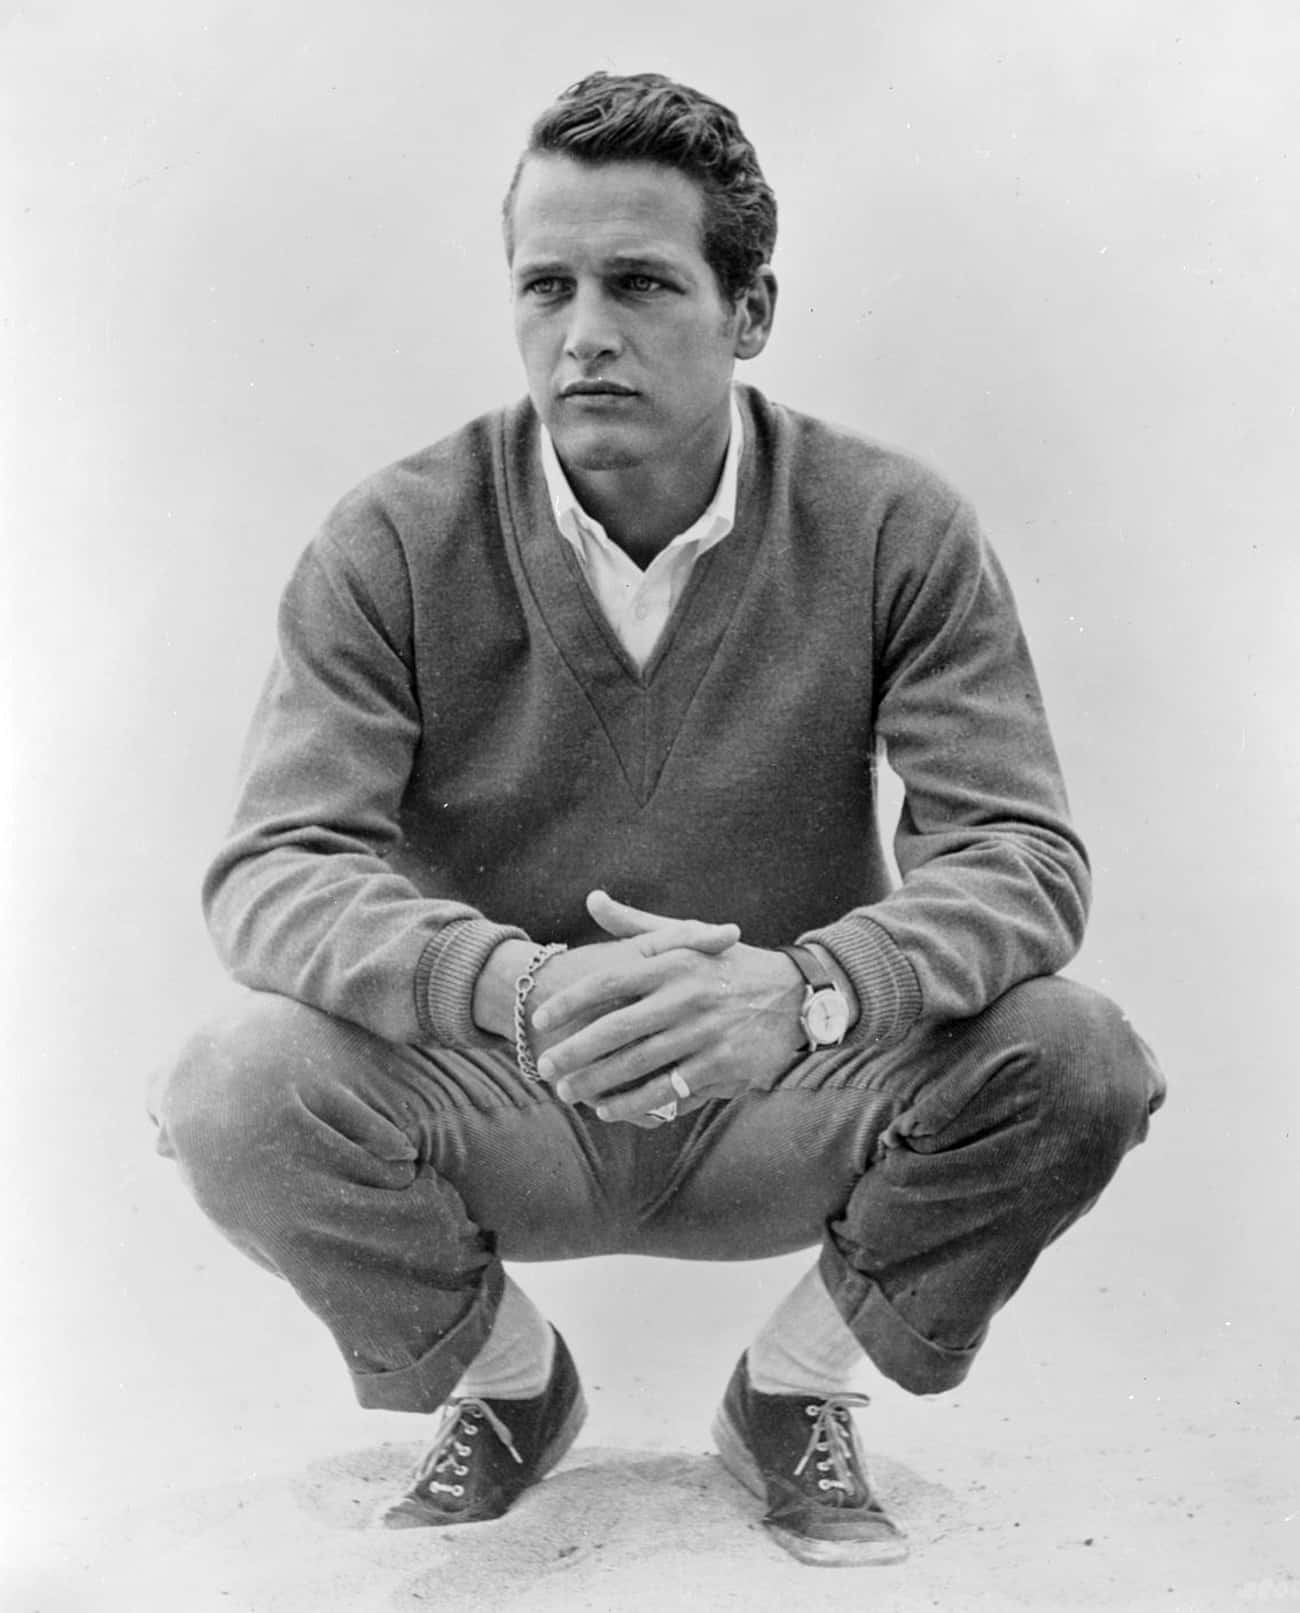 Young Paul Newman Crouching Down